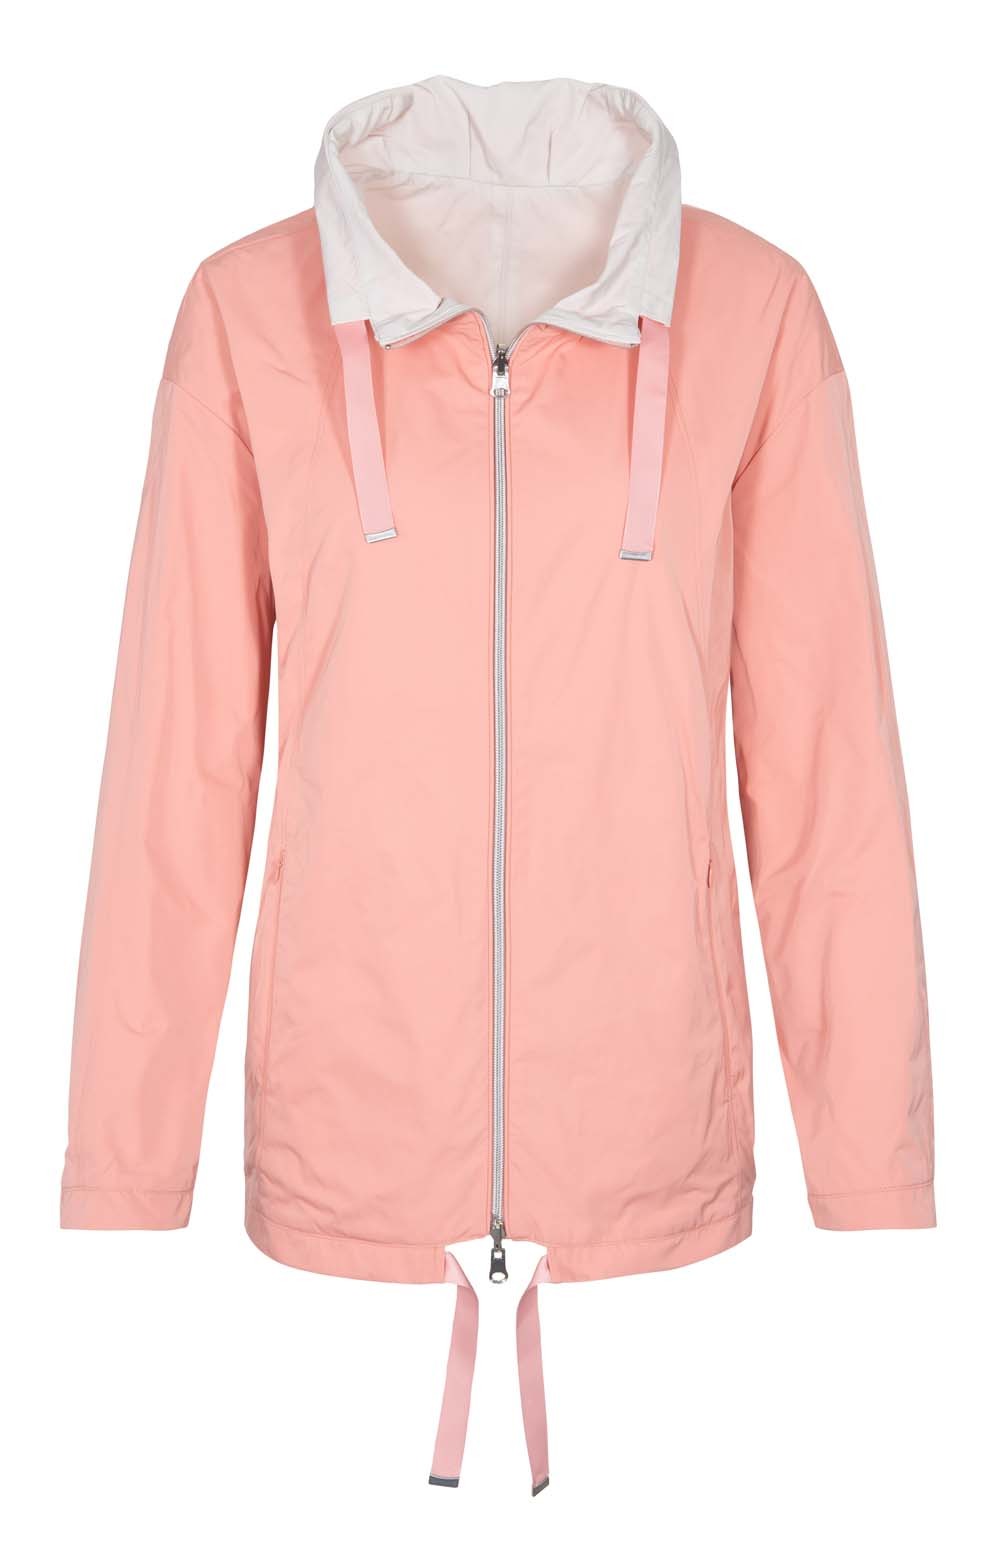 House Of Bruar Ladies Reversible Outerwear Jacket | 40 | Pink